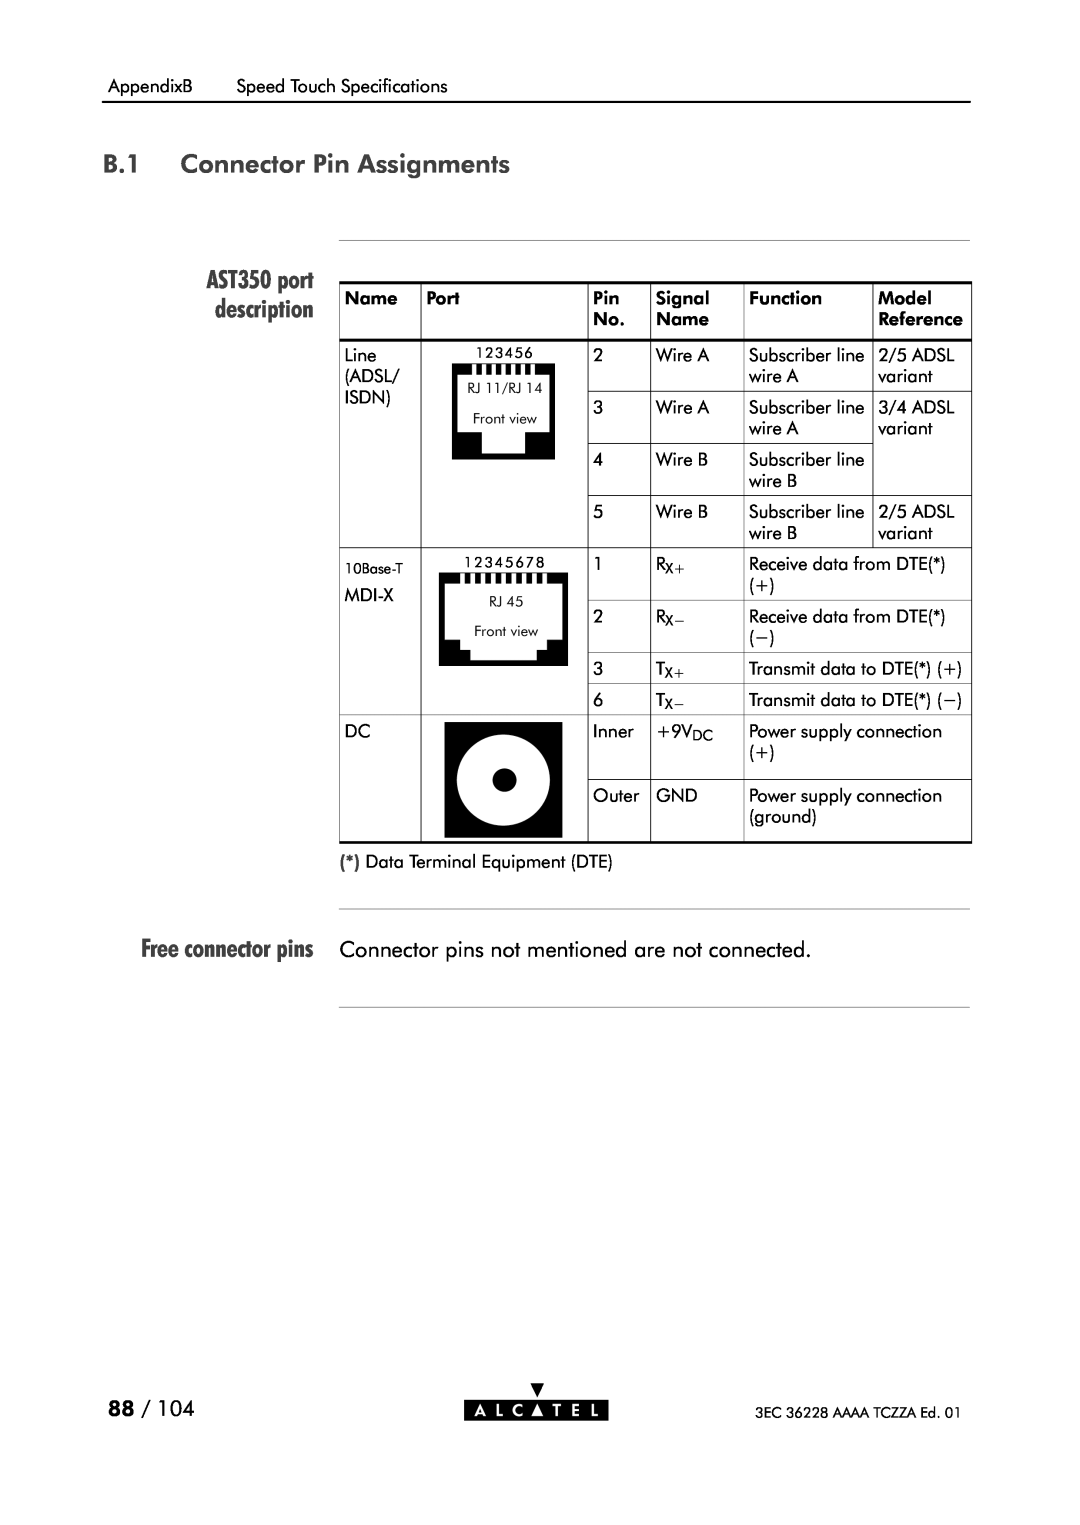 Alcatel Carrier Internetworking Solutions 350I manual B.1 Connector Pin Assignments, AST350 port description, Mdix 